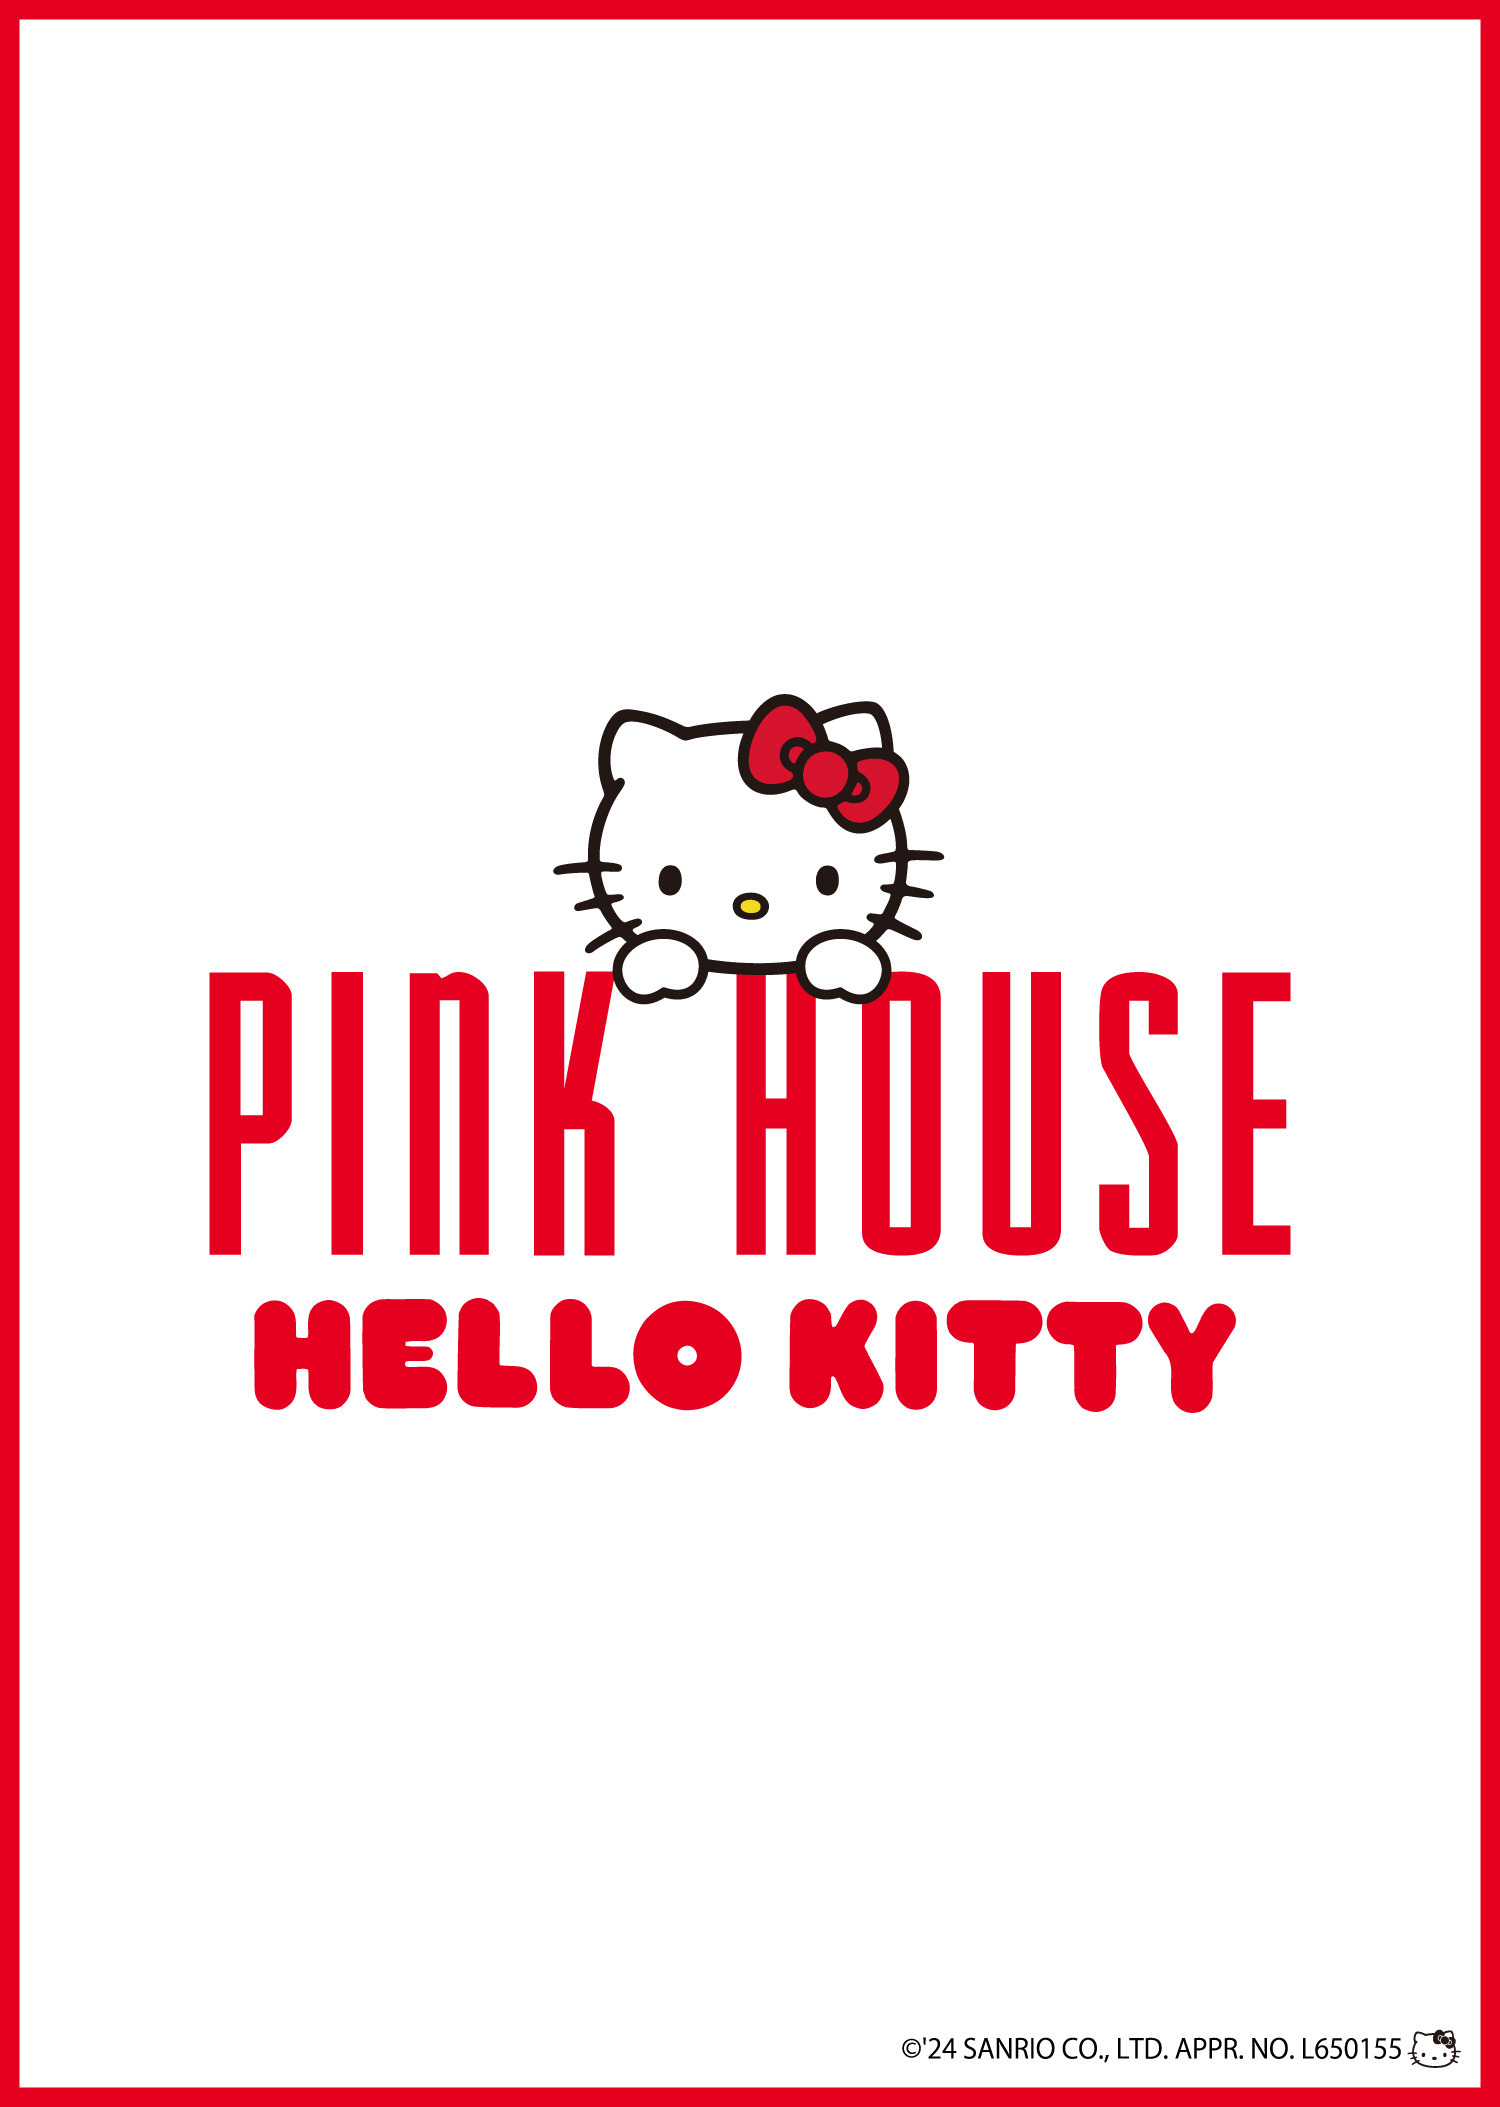 PINK HOUSE×HELLO KITTY コラボレーションアイテム発売